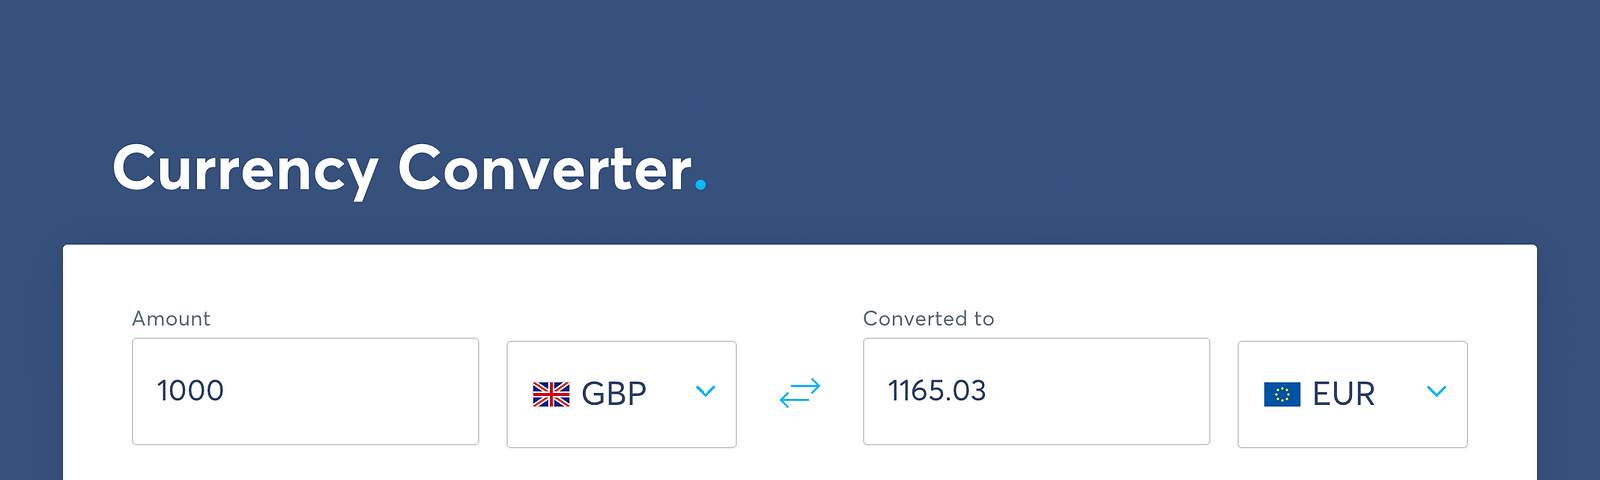 Currency converter screenshot